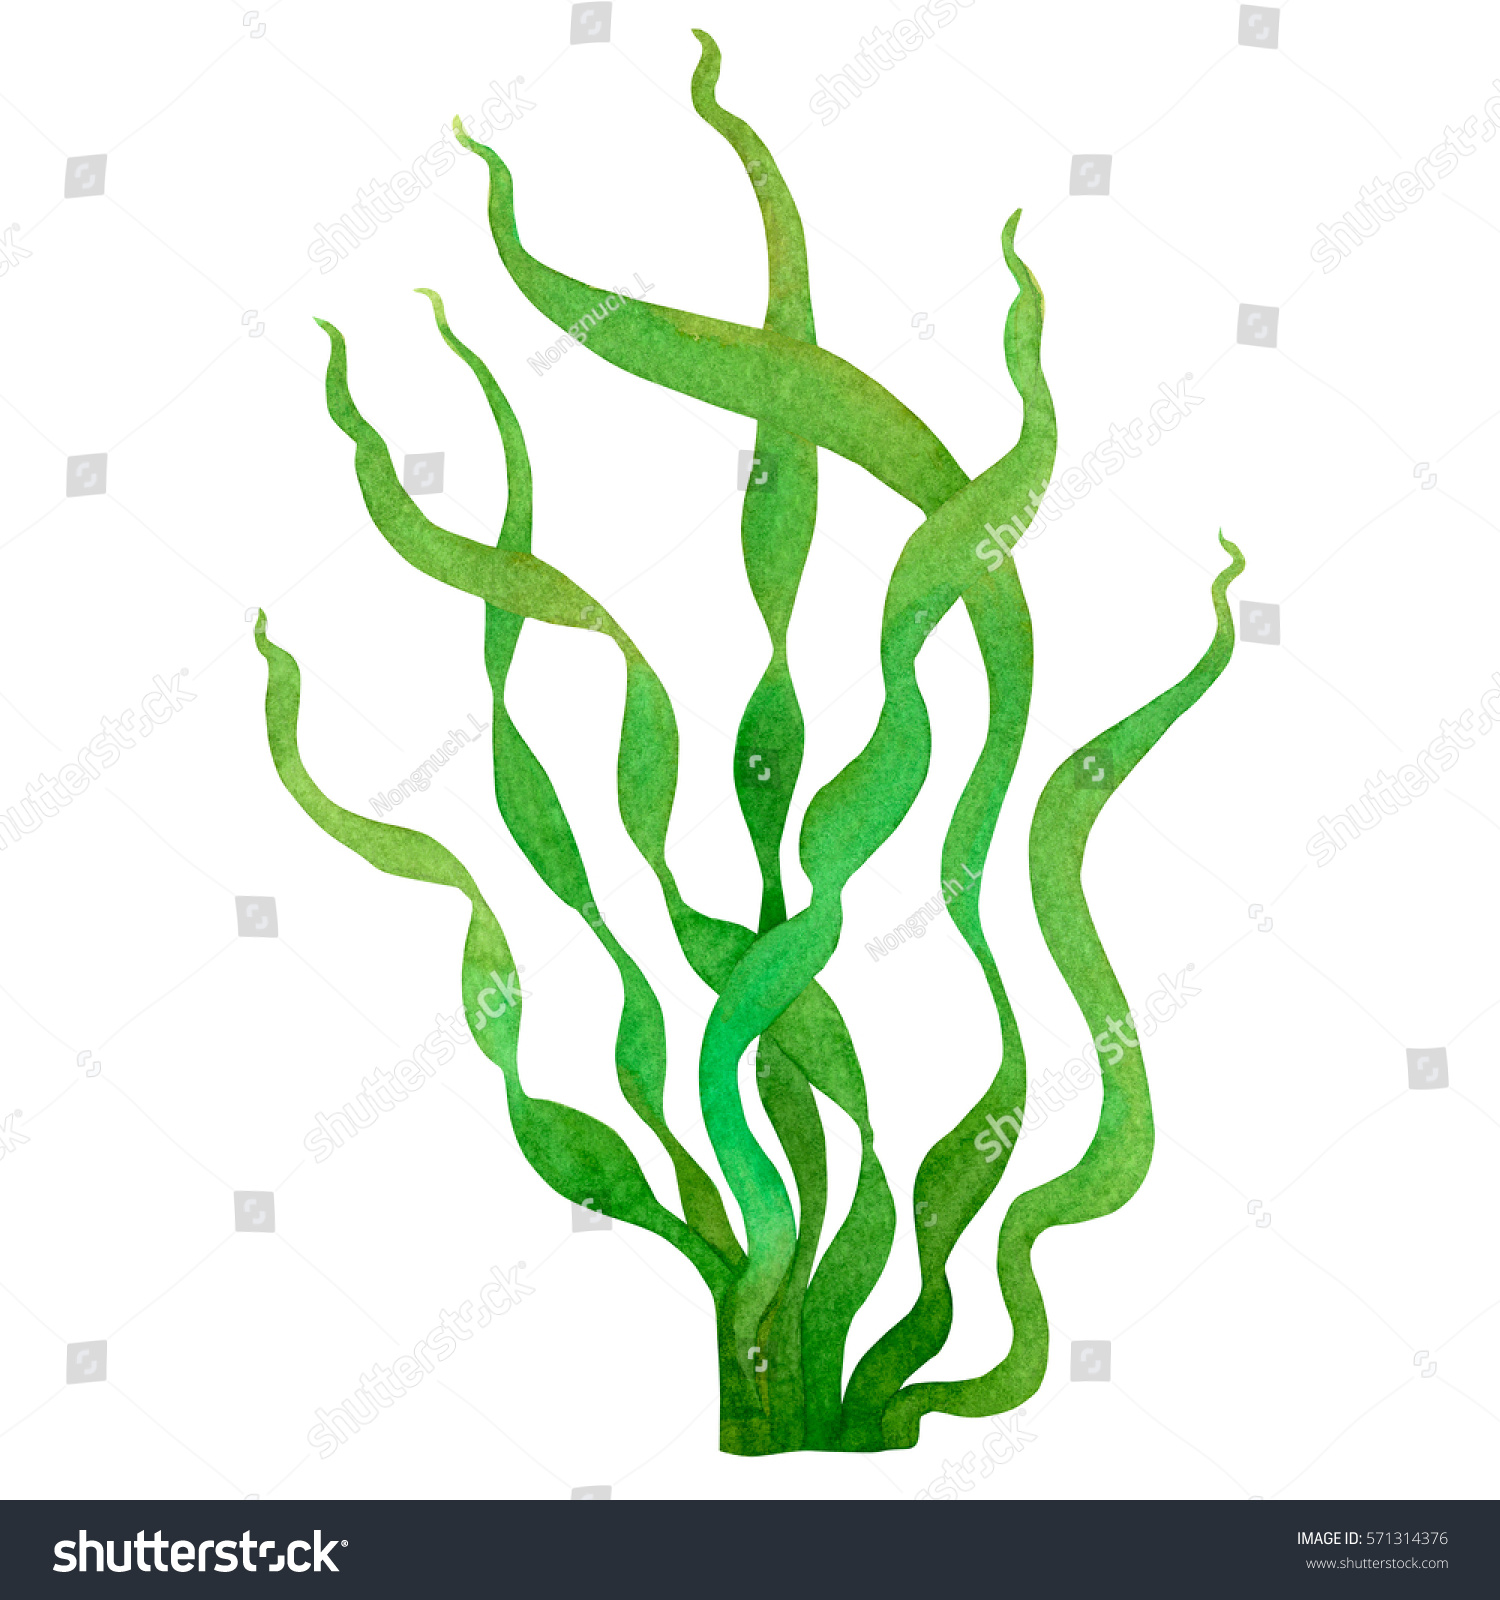 Green seaweed background photo